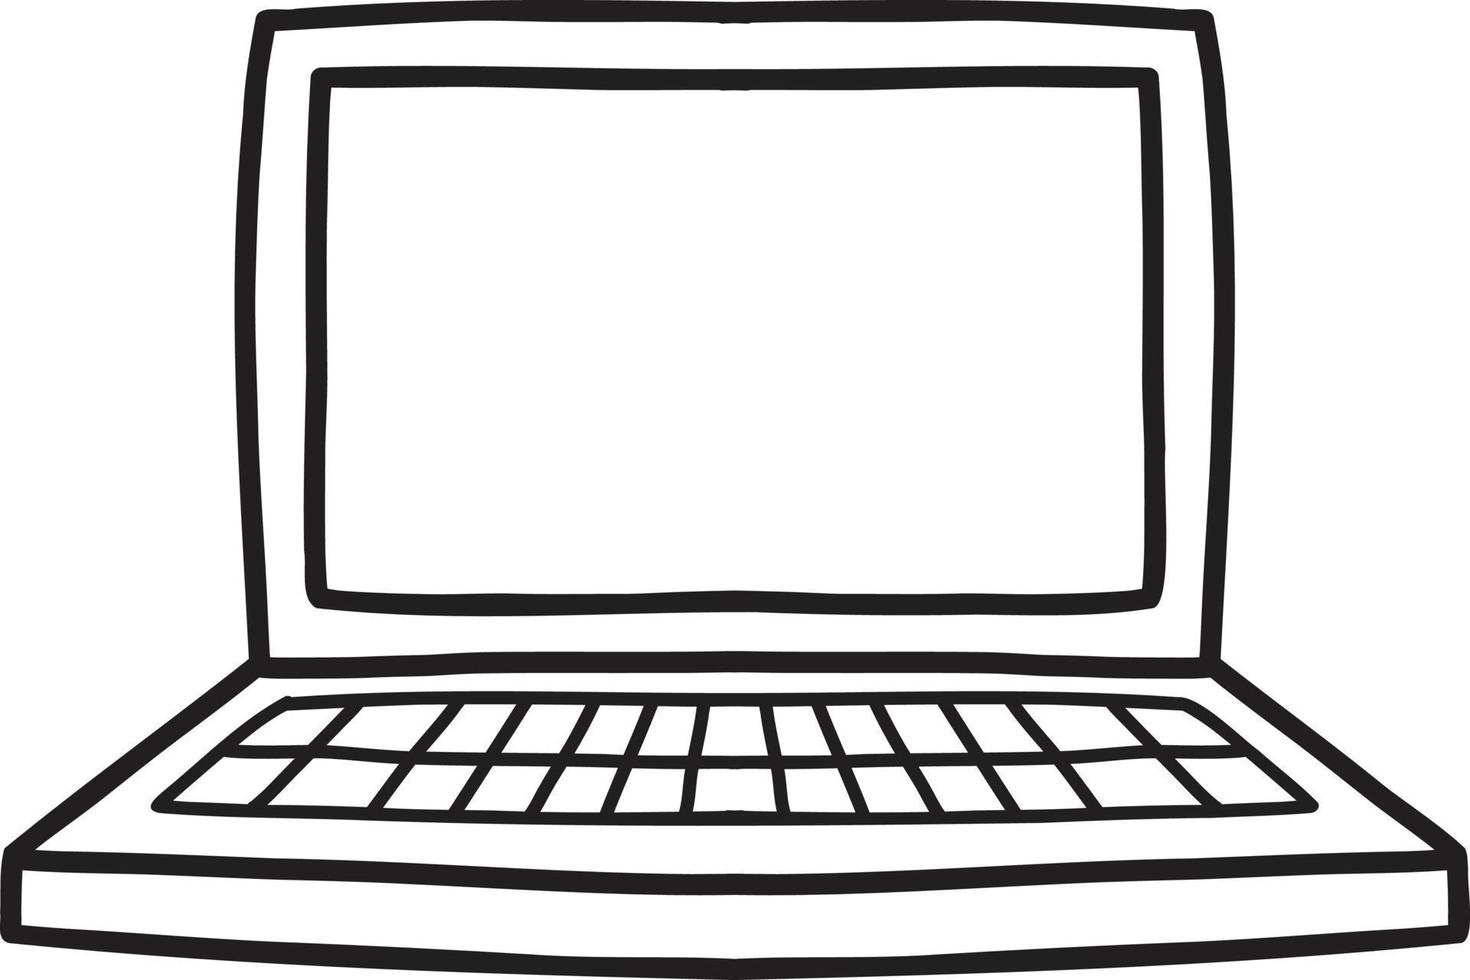 ilustración de computadora portátil dibujada a mano vector